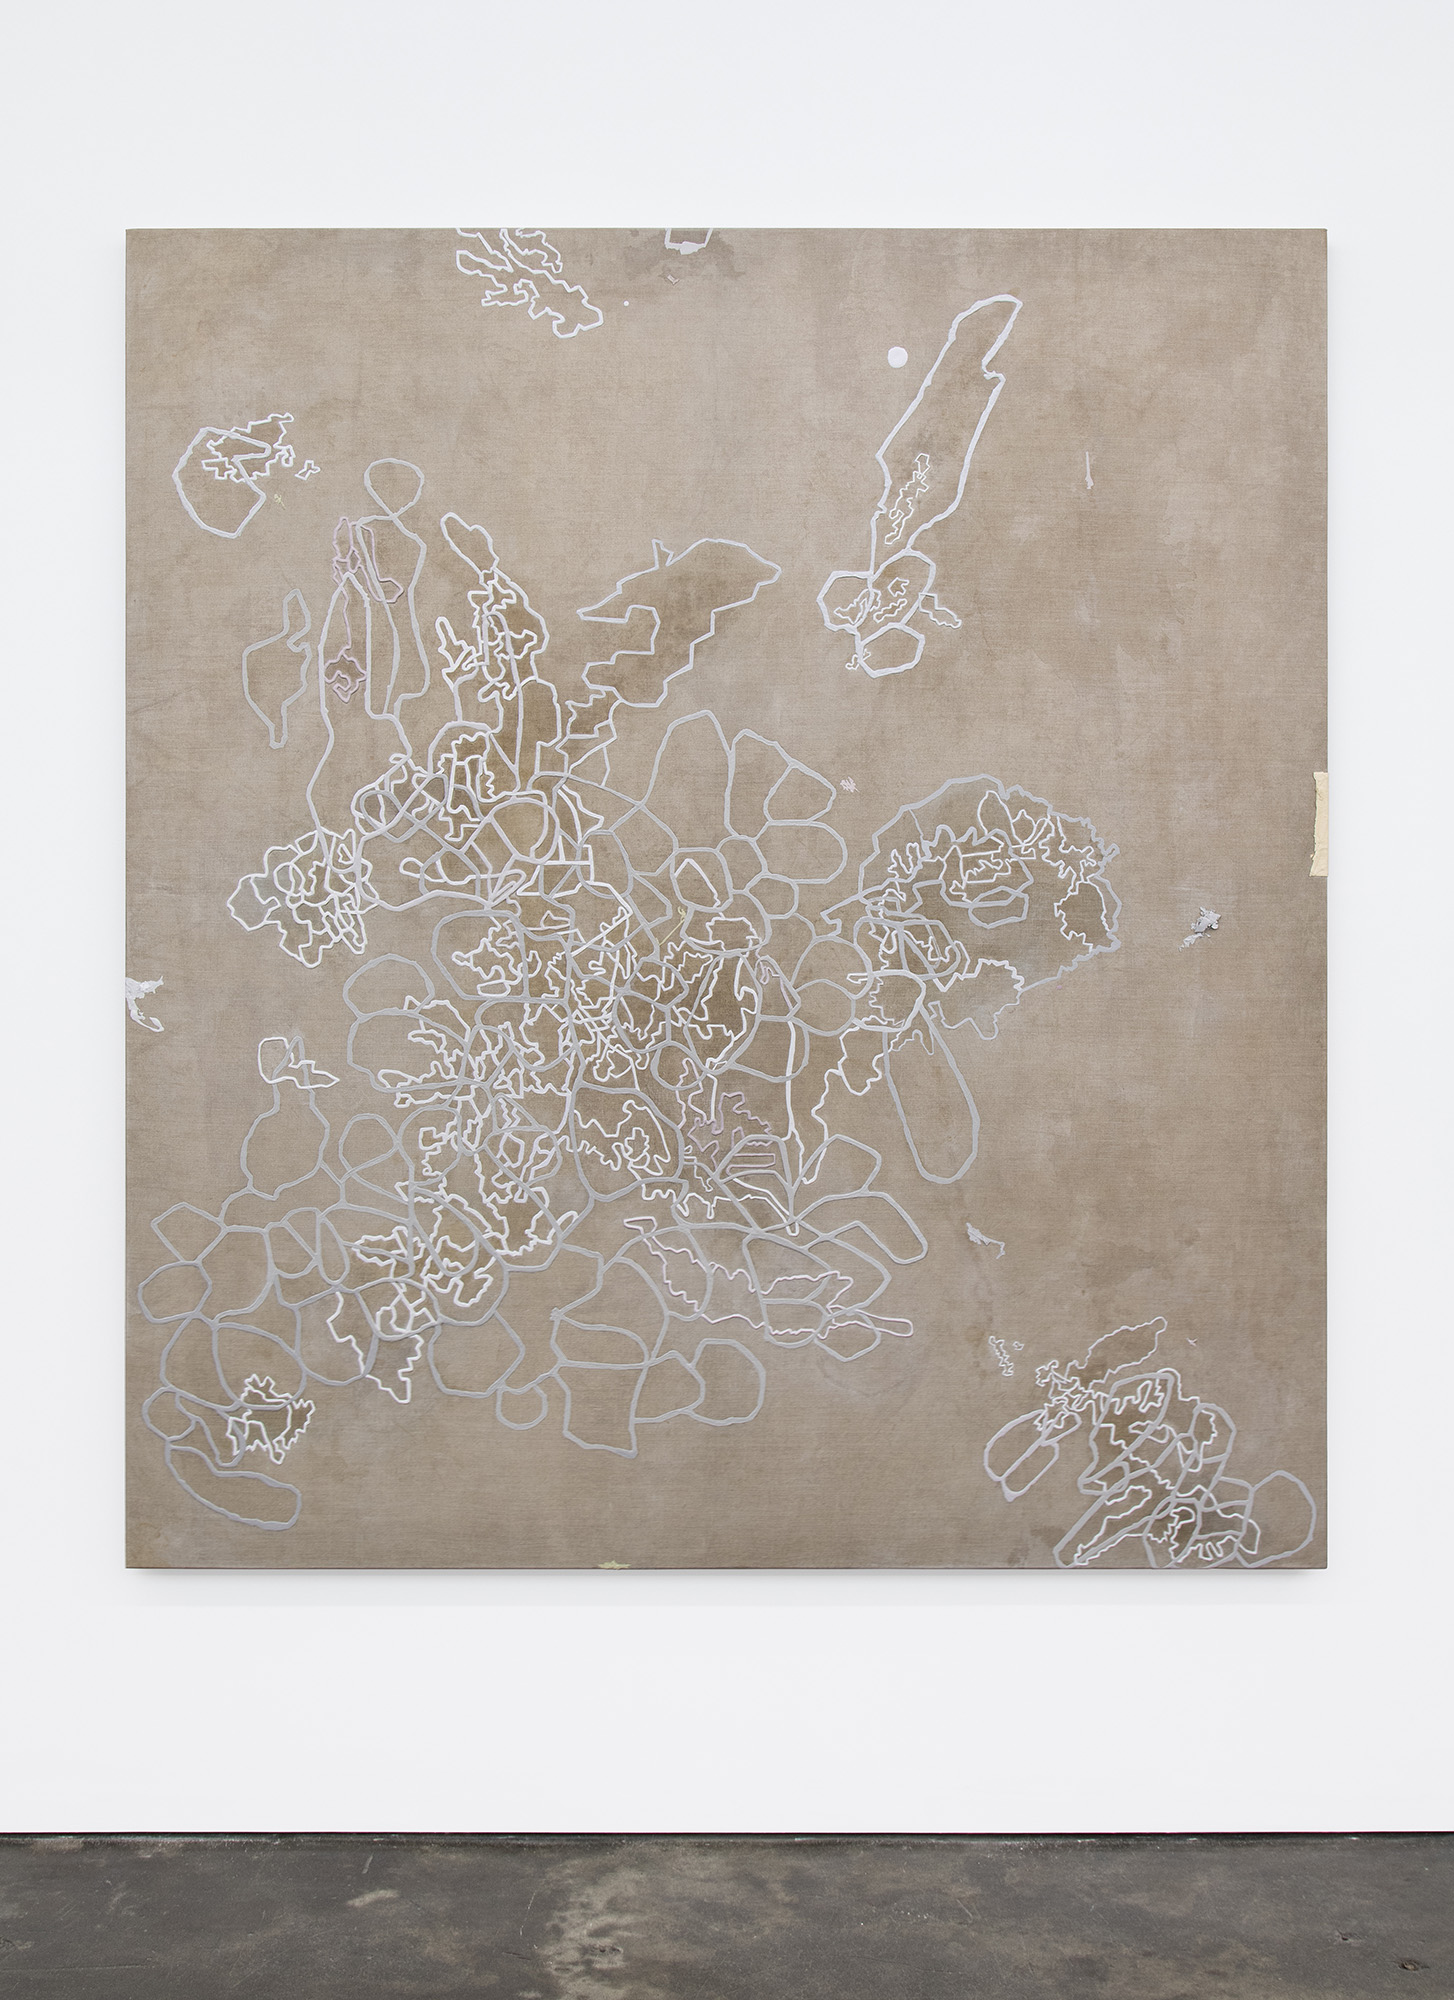 Julie Irving grown down, Acrylic on linen, 170 x 180cm, 2018 - 19